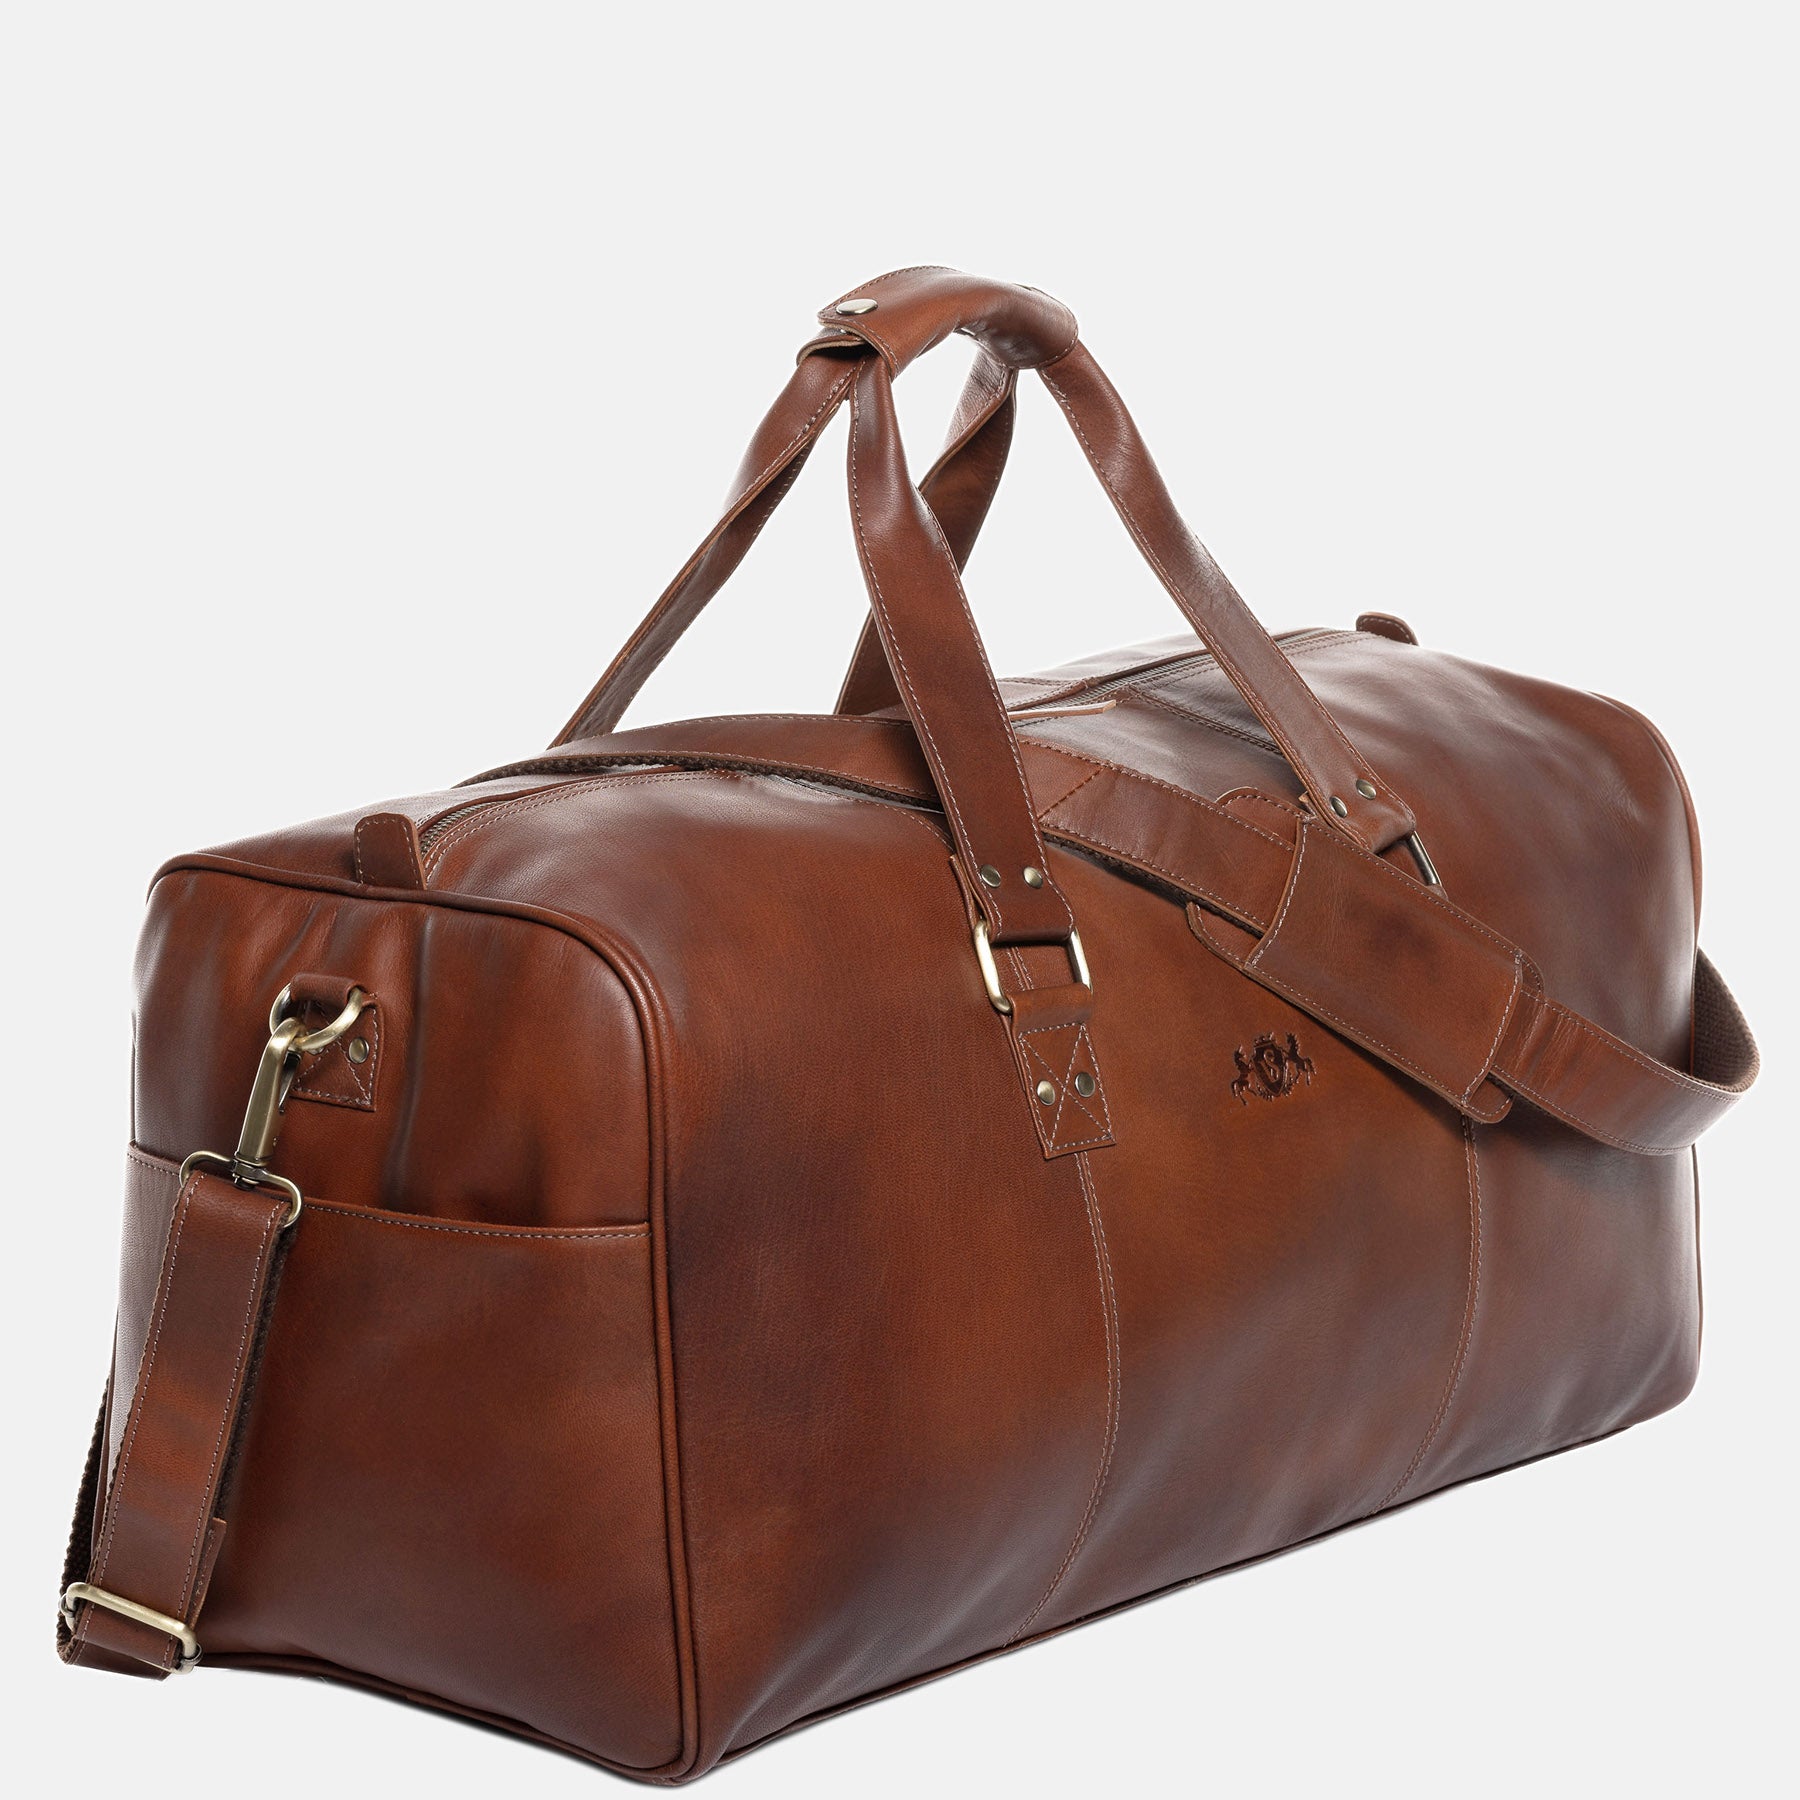 XL Travel bag LINUS smooth leather light brown